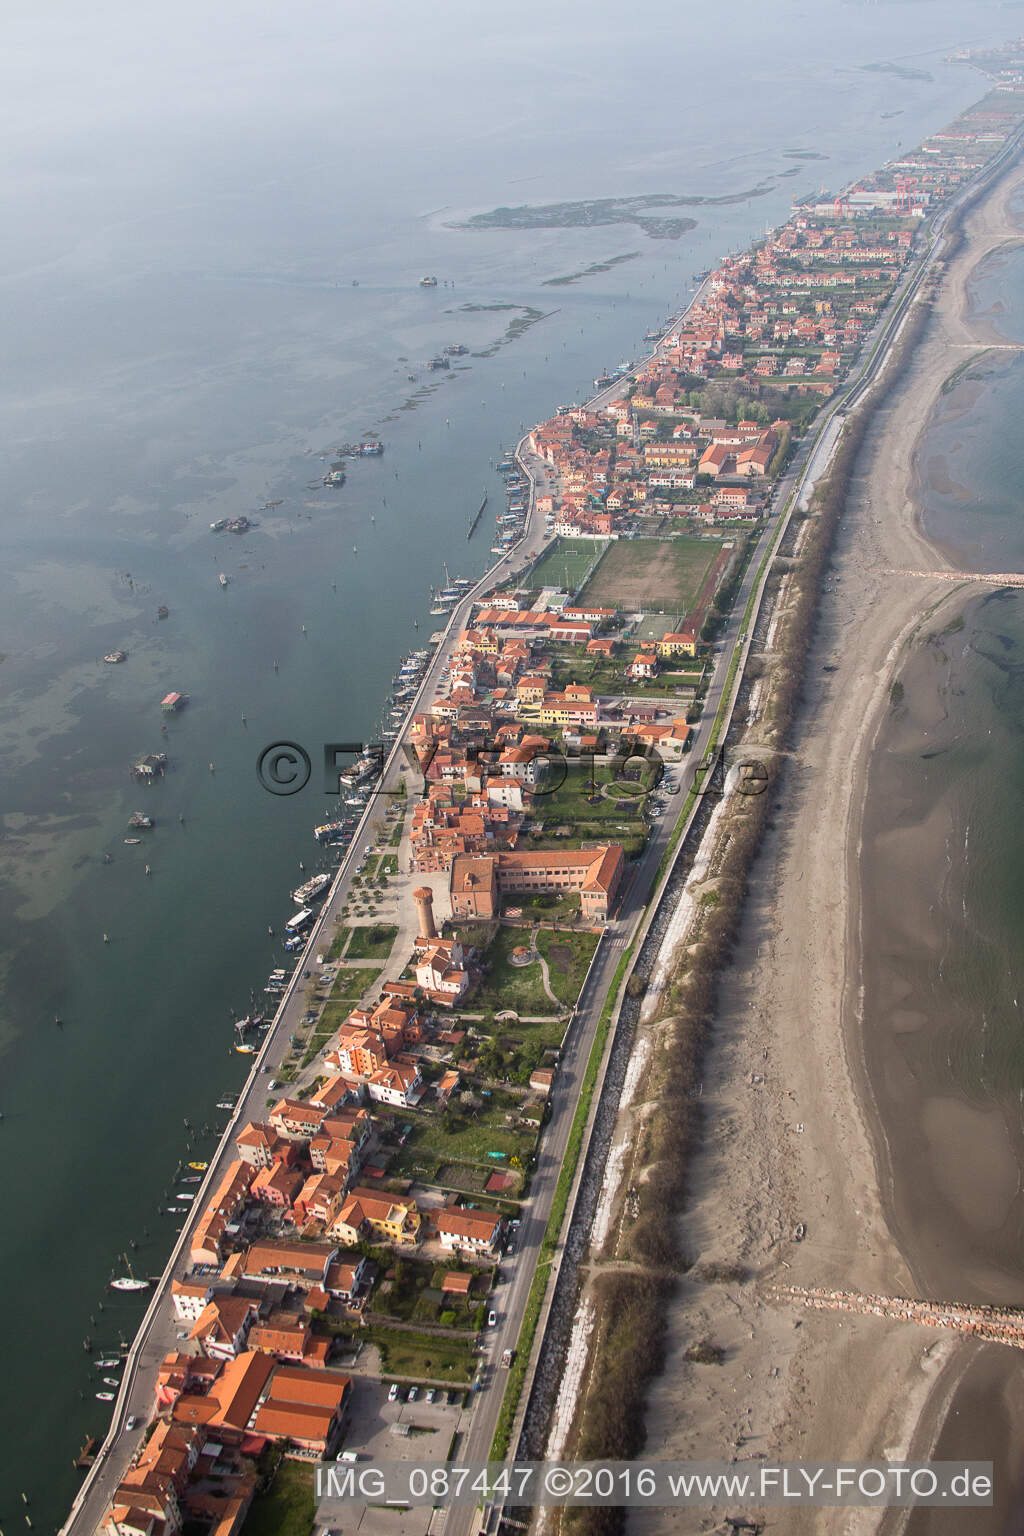 Aerial view of Settlement area in the district Pellestrina in Venedig in Venetien, Italy